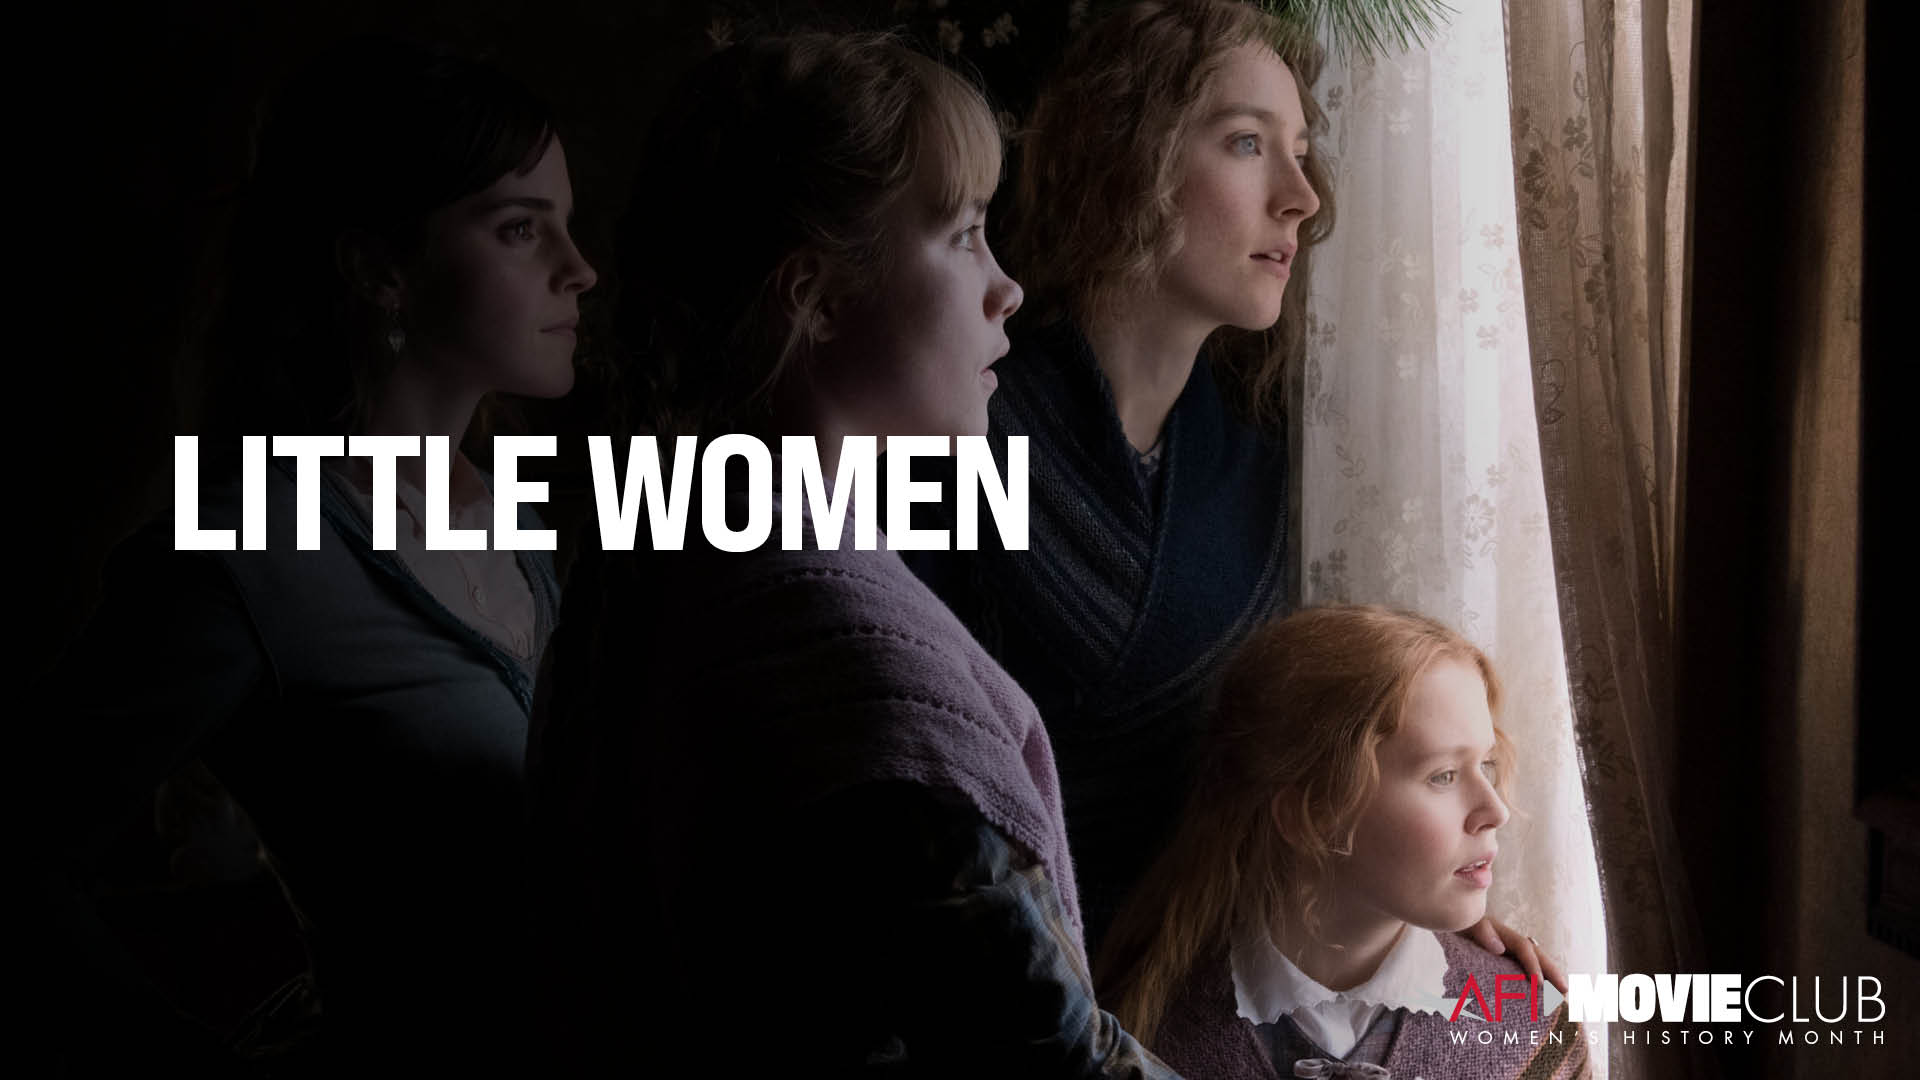 Little Women Film Still - Emma Watson, Saoirse Ronan, Florence Pugh, and Eliza Scanlen